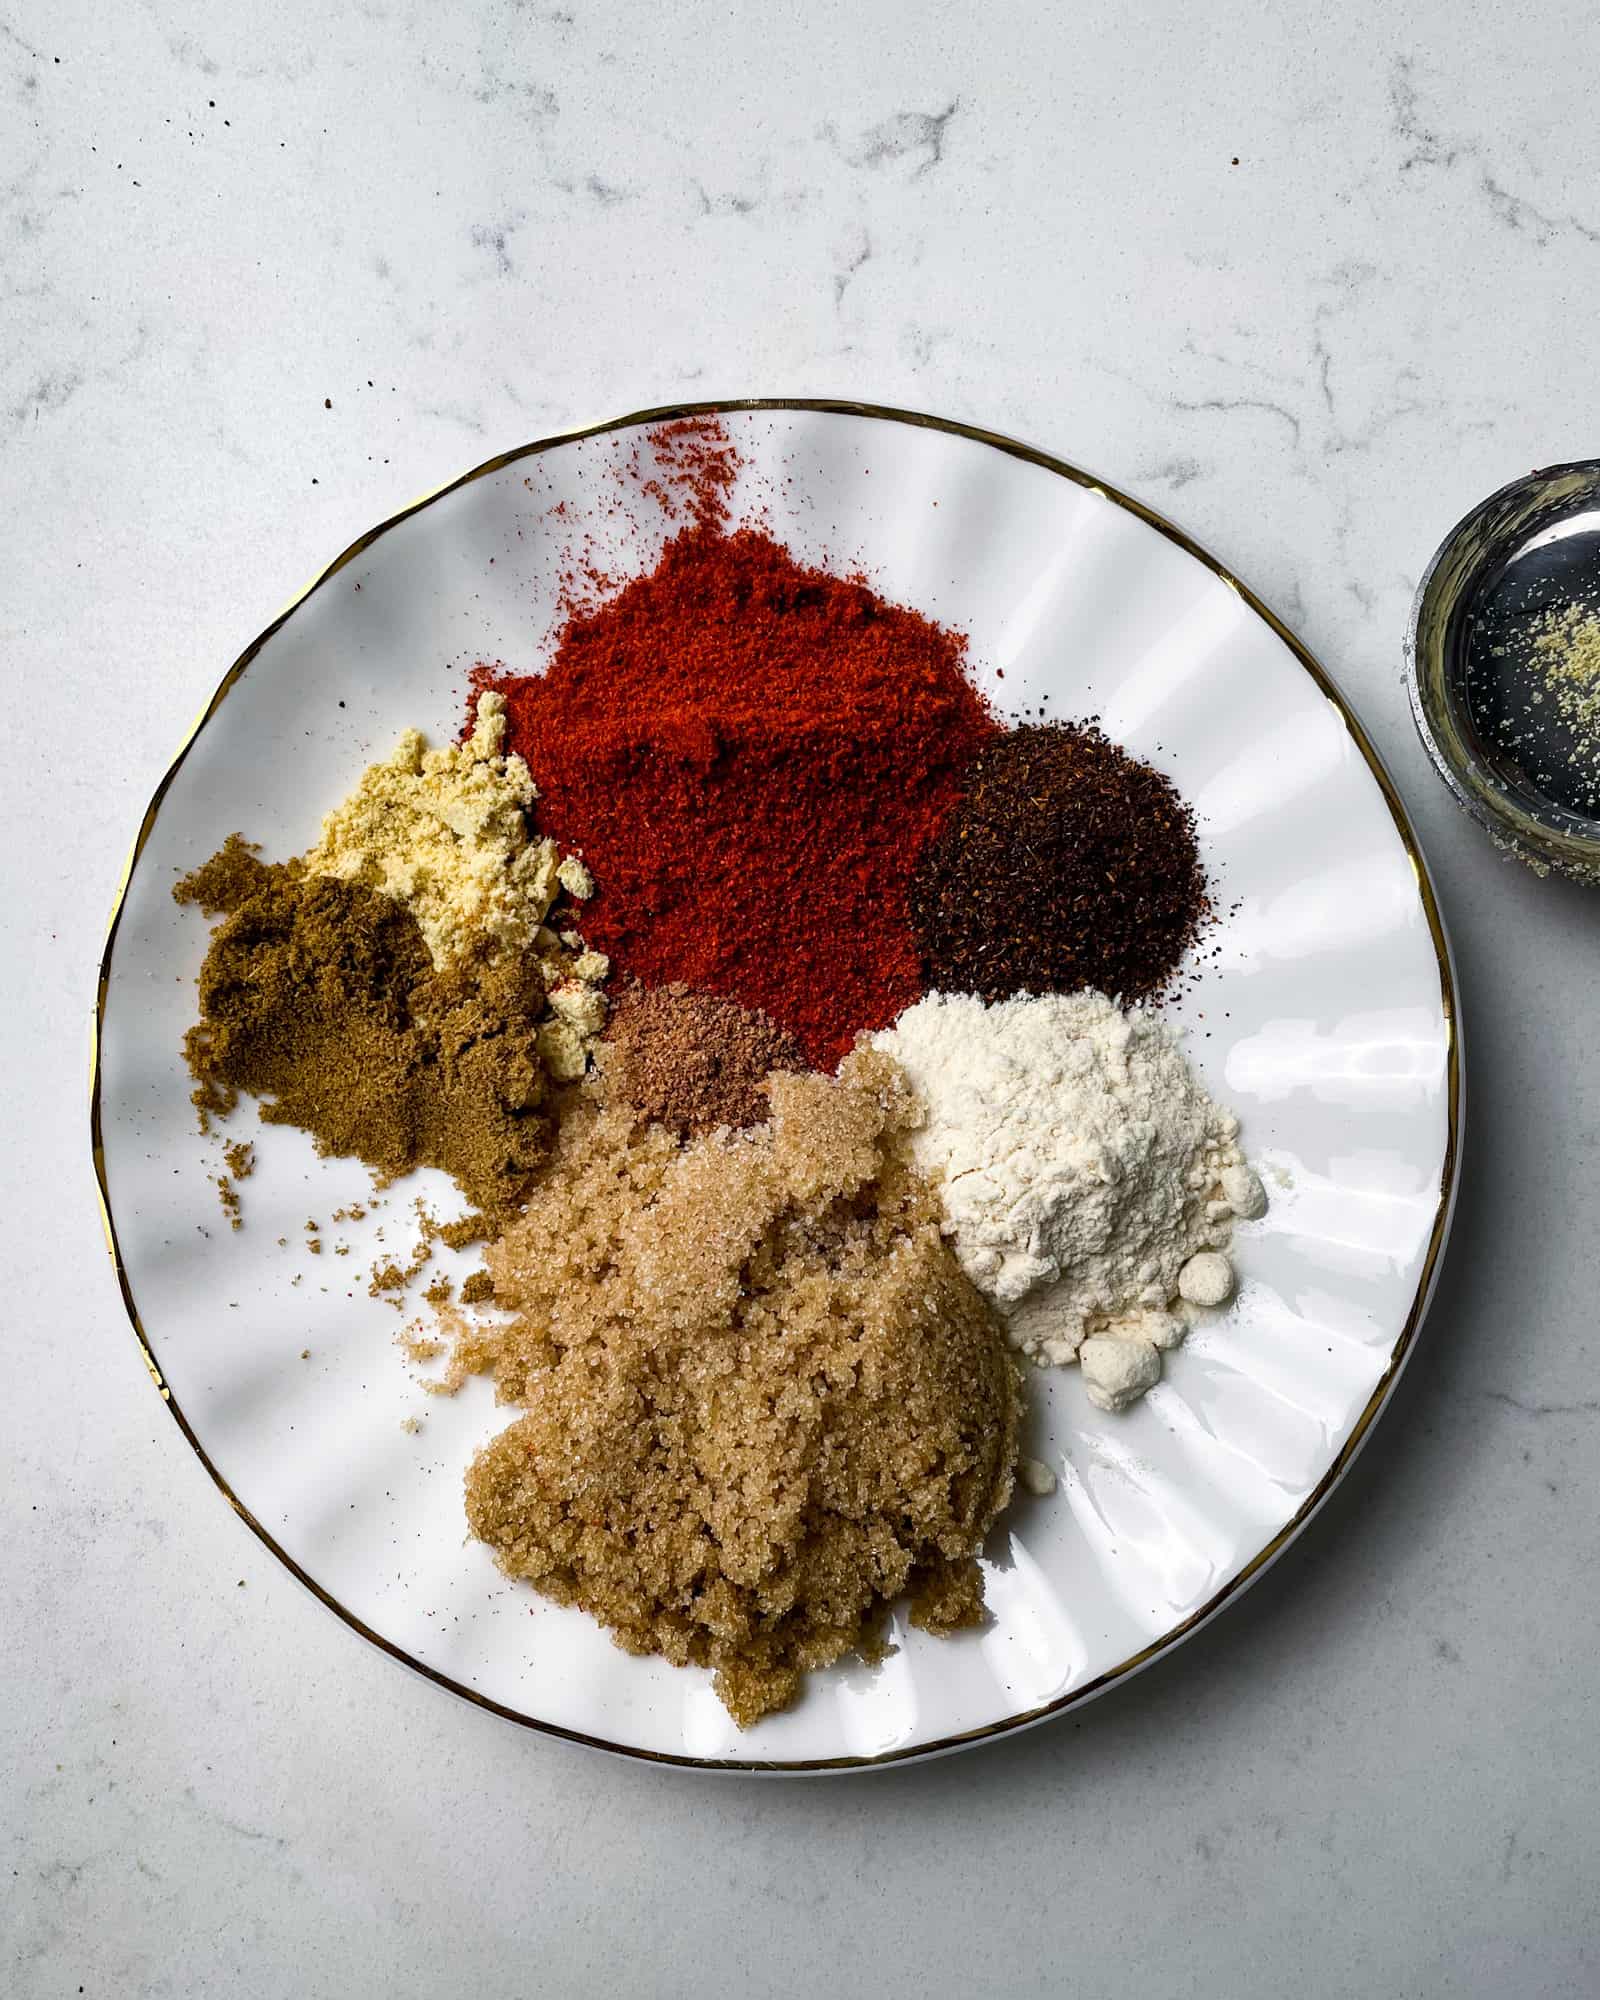 the dry rub ingredients on a plate - smoked paprika, black pepper, onion powder, ground mustard, onion powder, chili powder, coriander, and brown sugar.